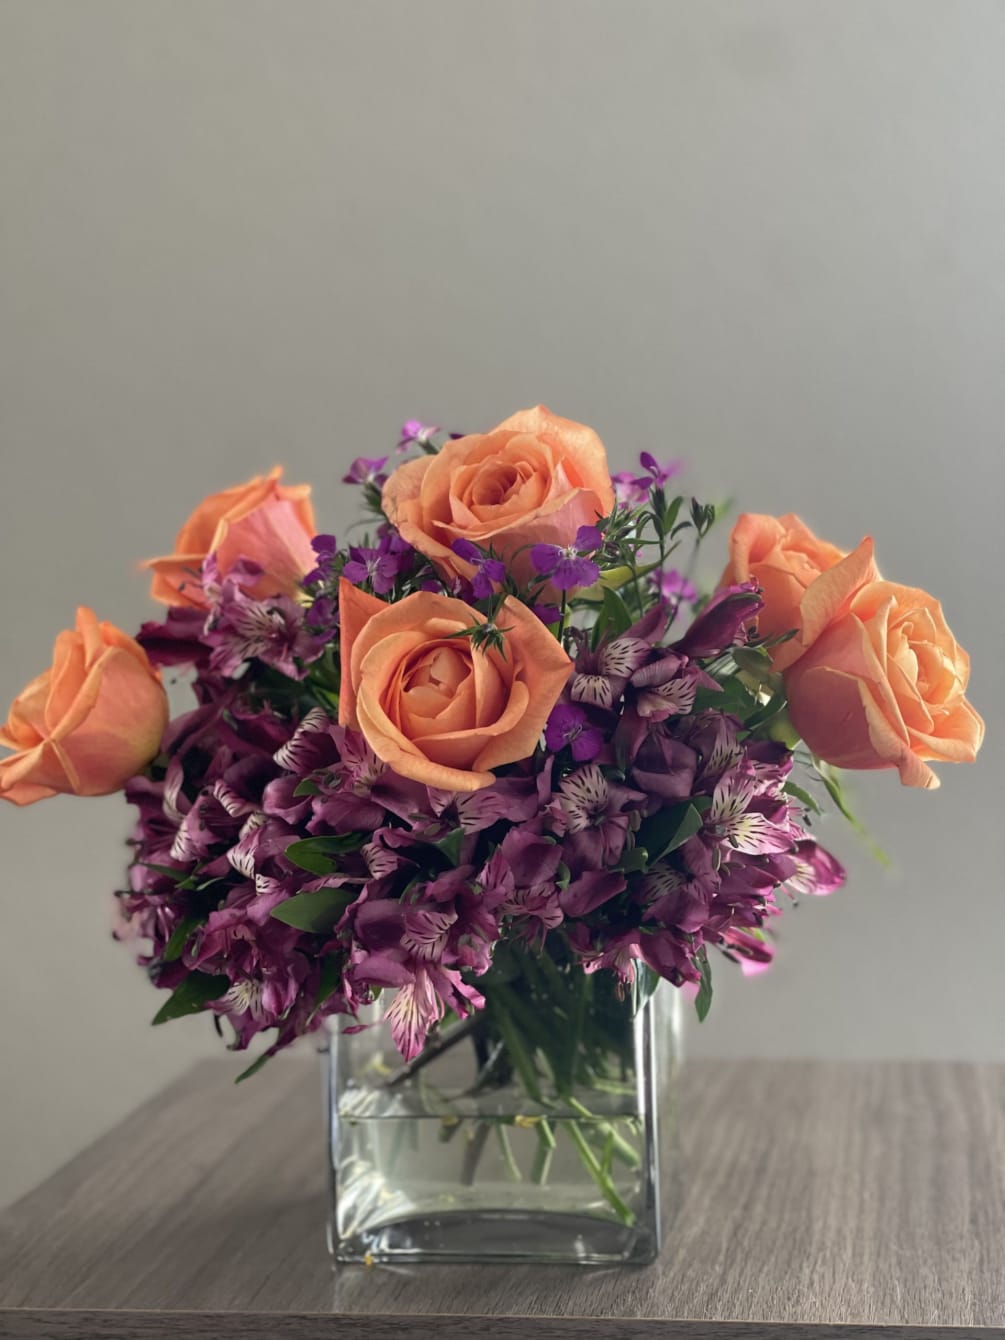 Lovely floral arrangement of orange roses, purple alstroemeria flowers and purple dianthus